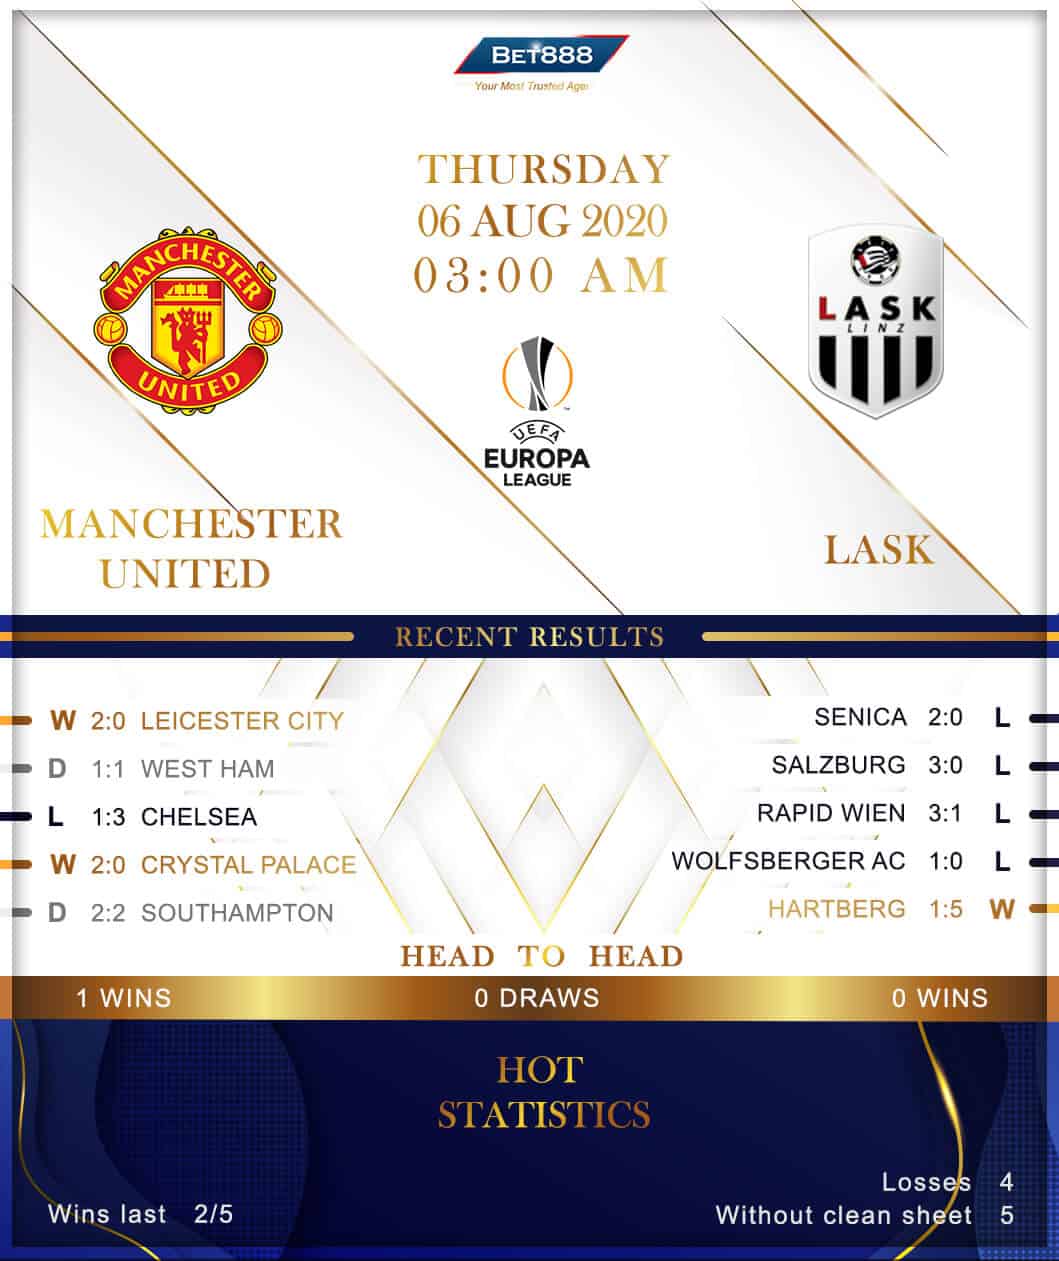 Manchester United vs LASK 06/08/20